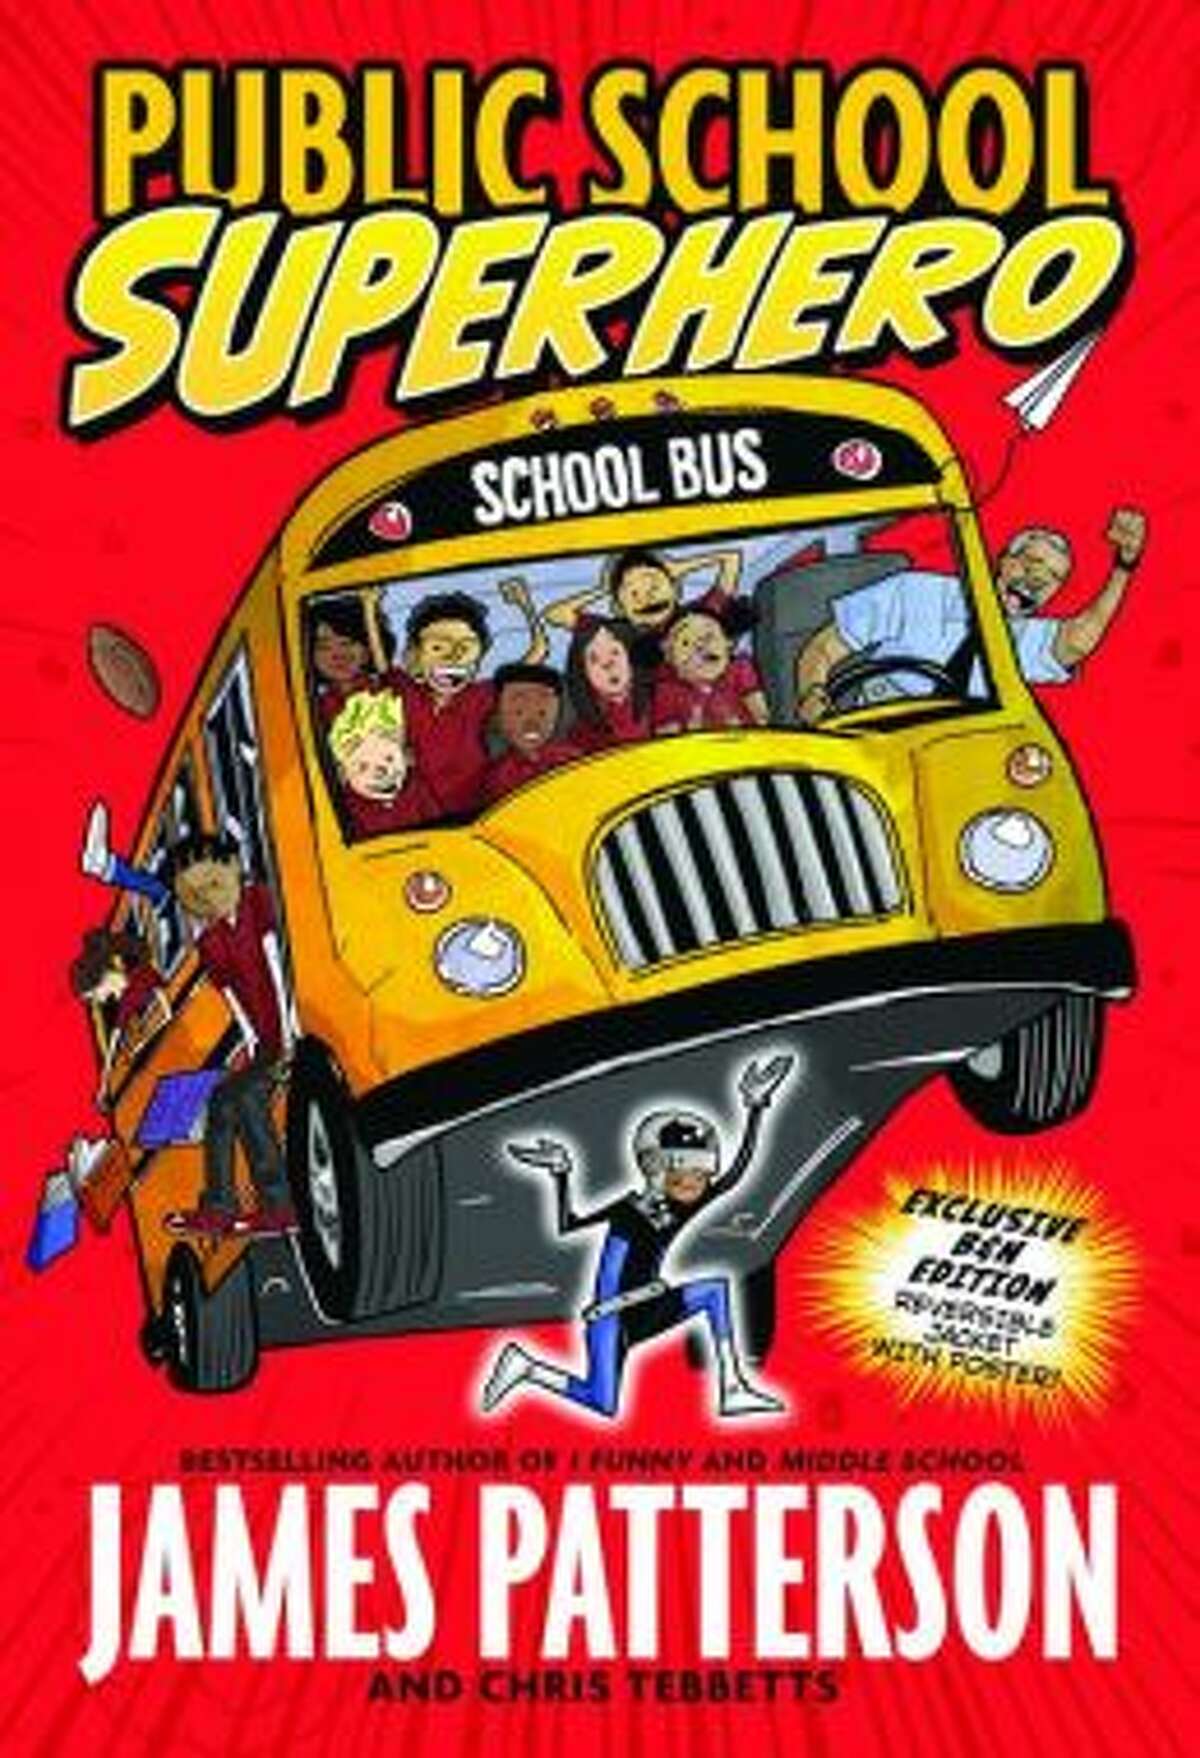 "Public School Superhero"